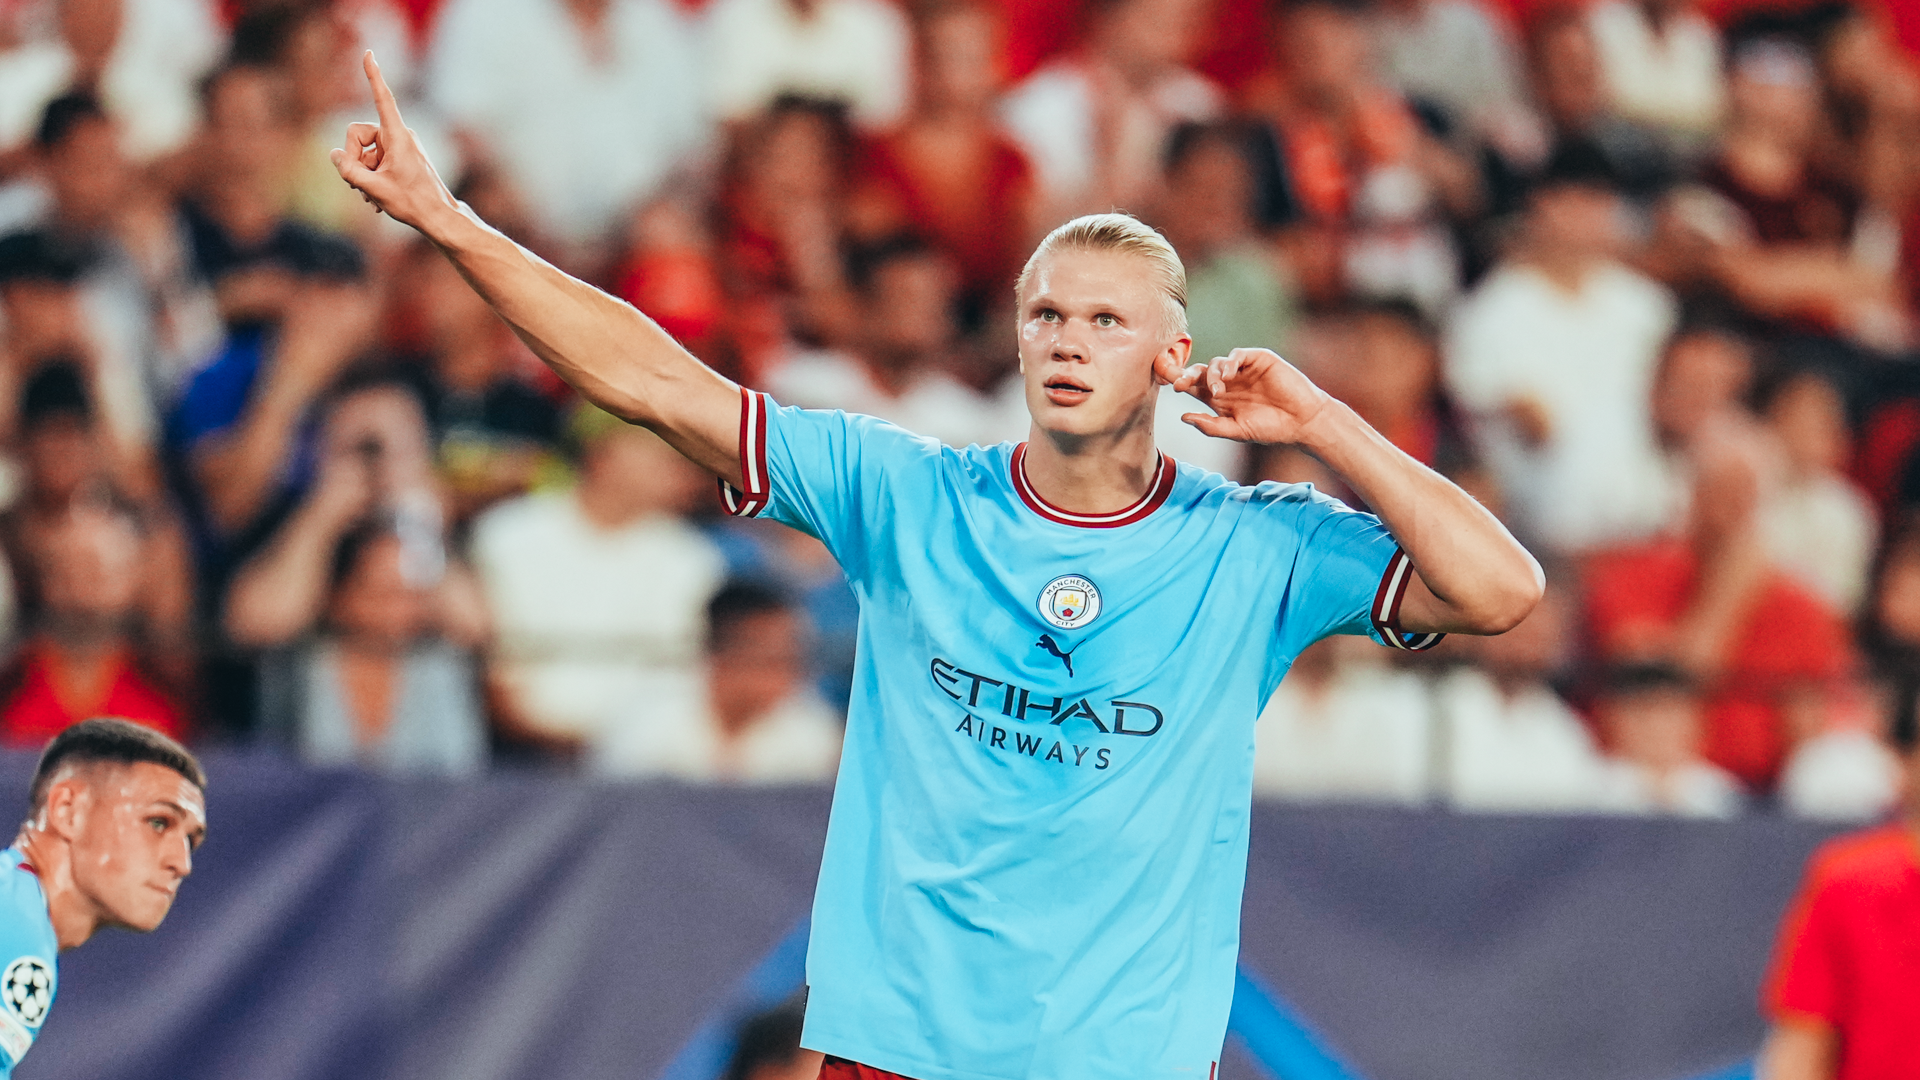 CELEBRATION TIME : Our Norwegian striker marks another fine goal